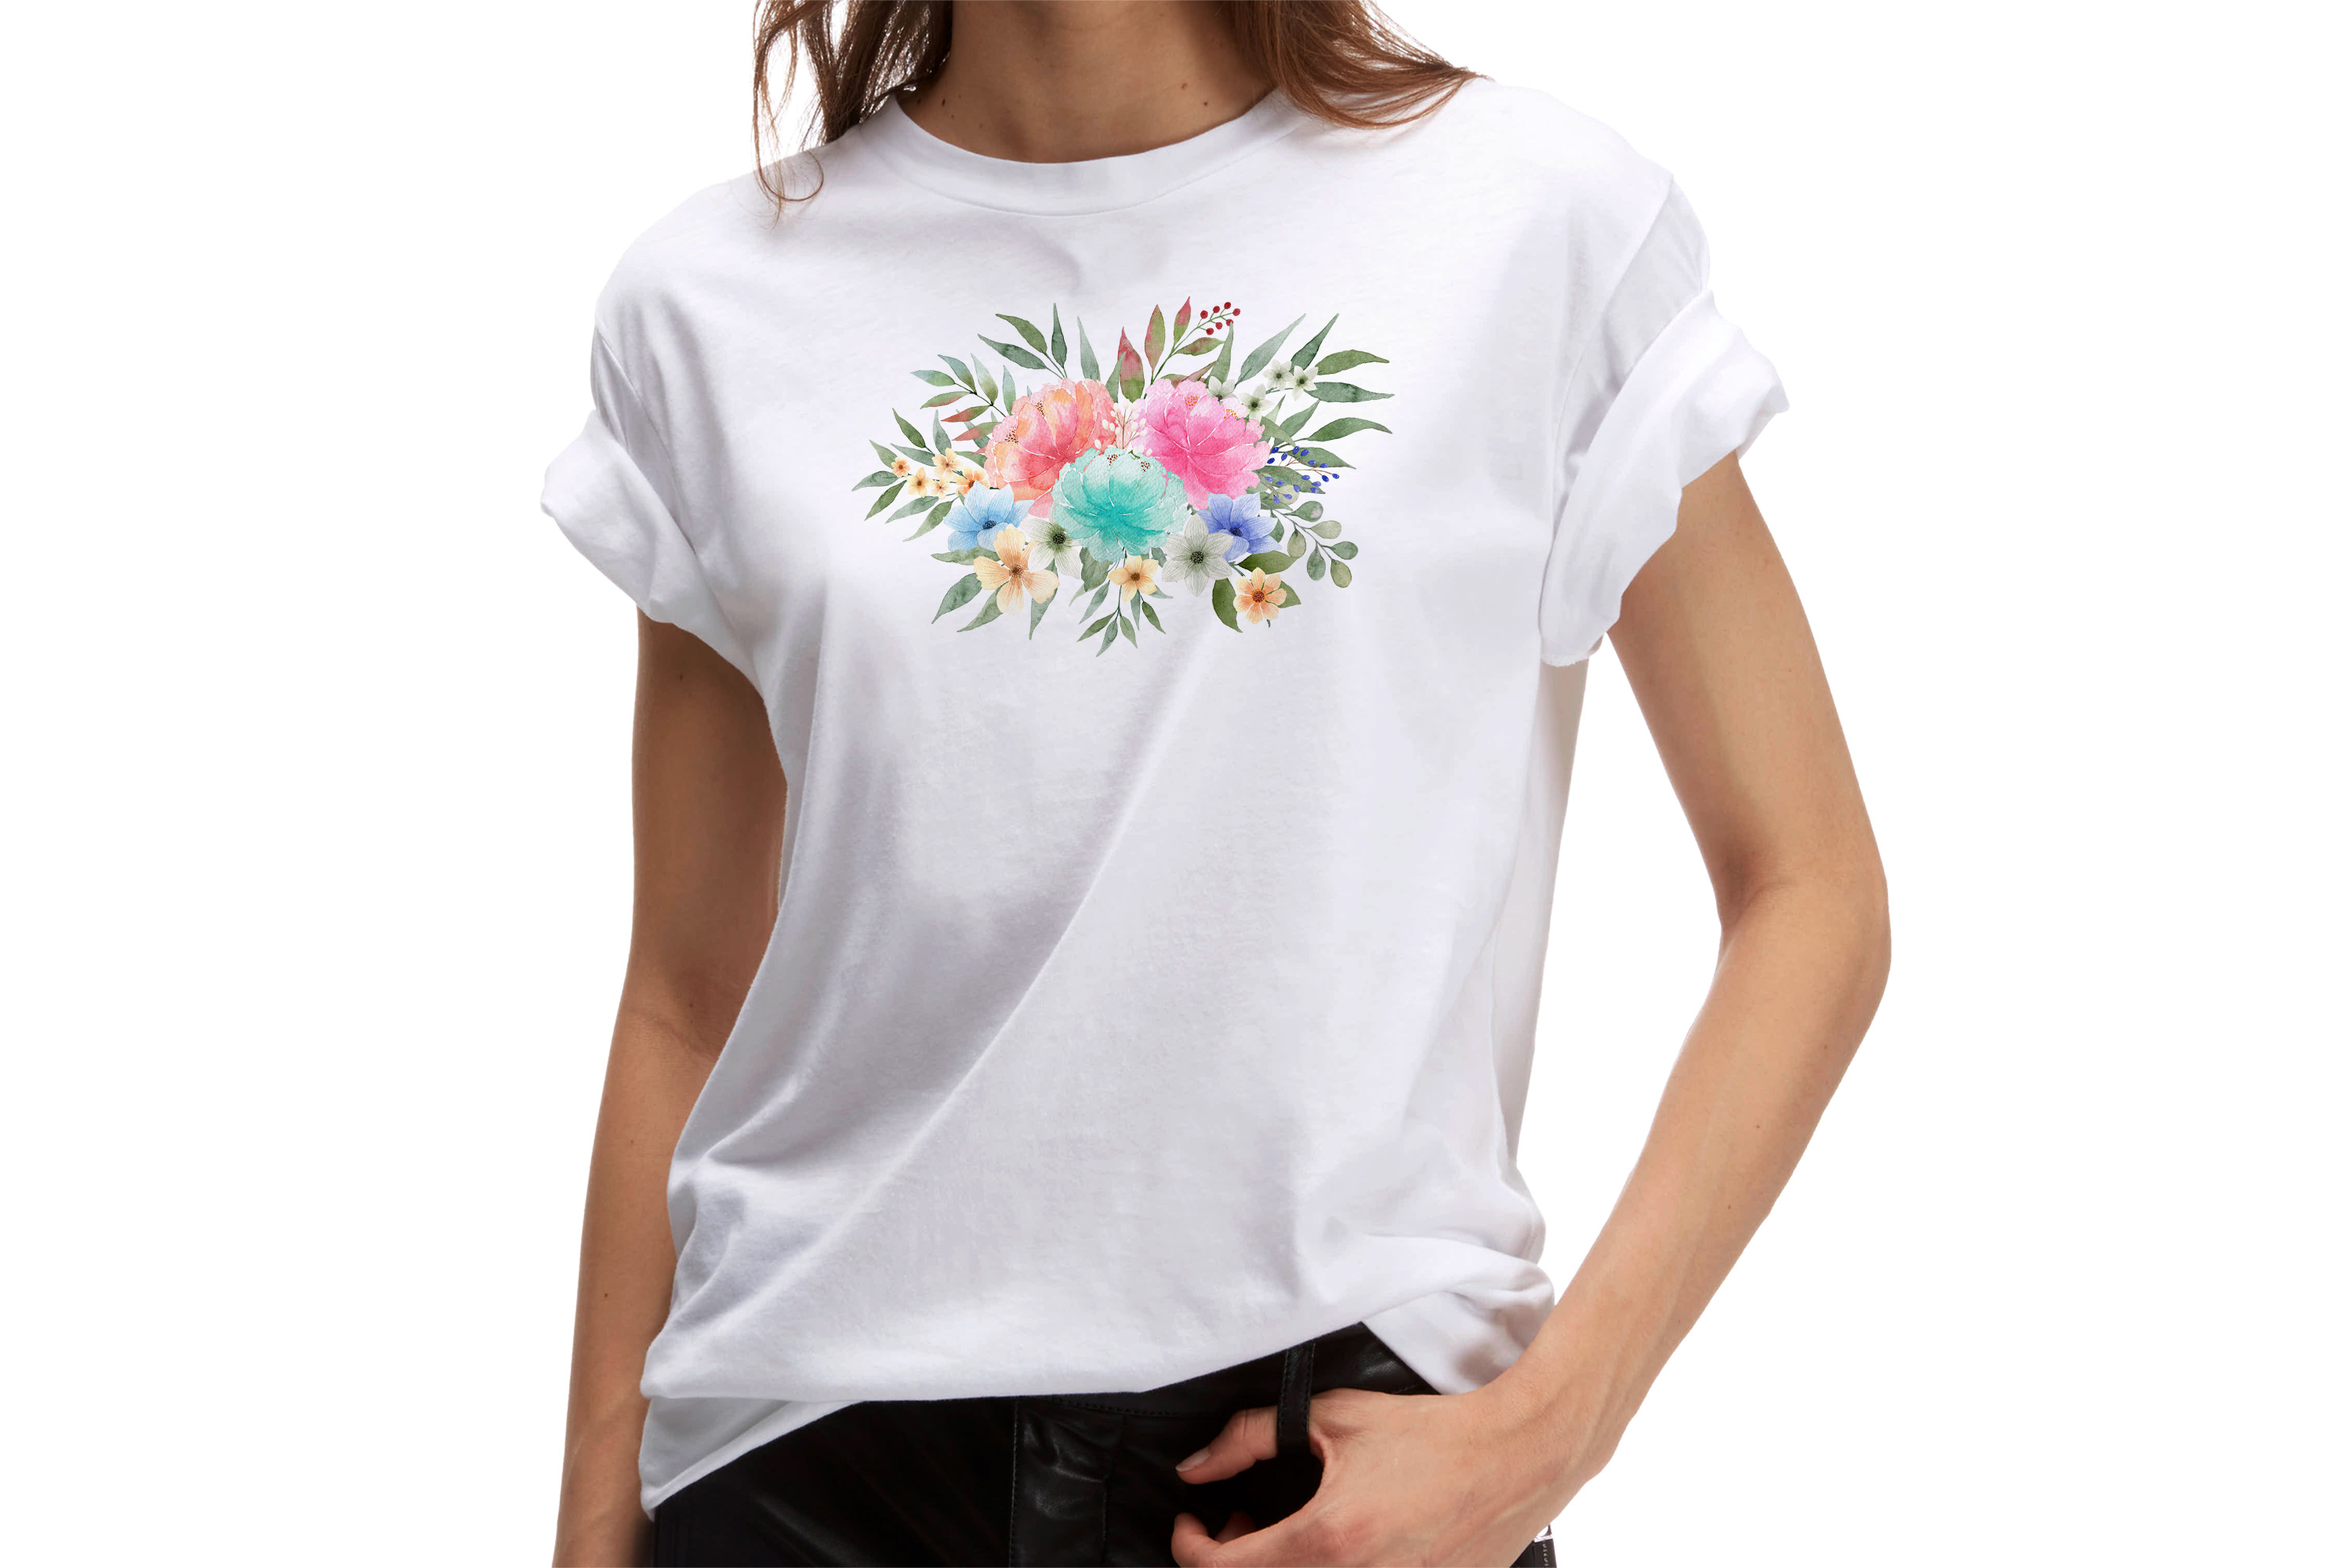 Watercolor Floral Design in Pastel Colors t-shirt mockup.